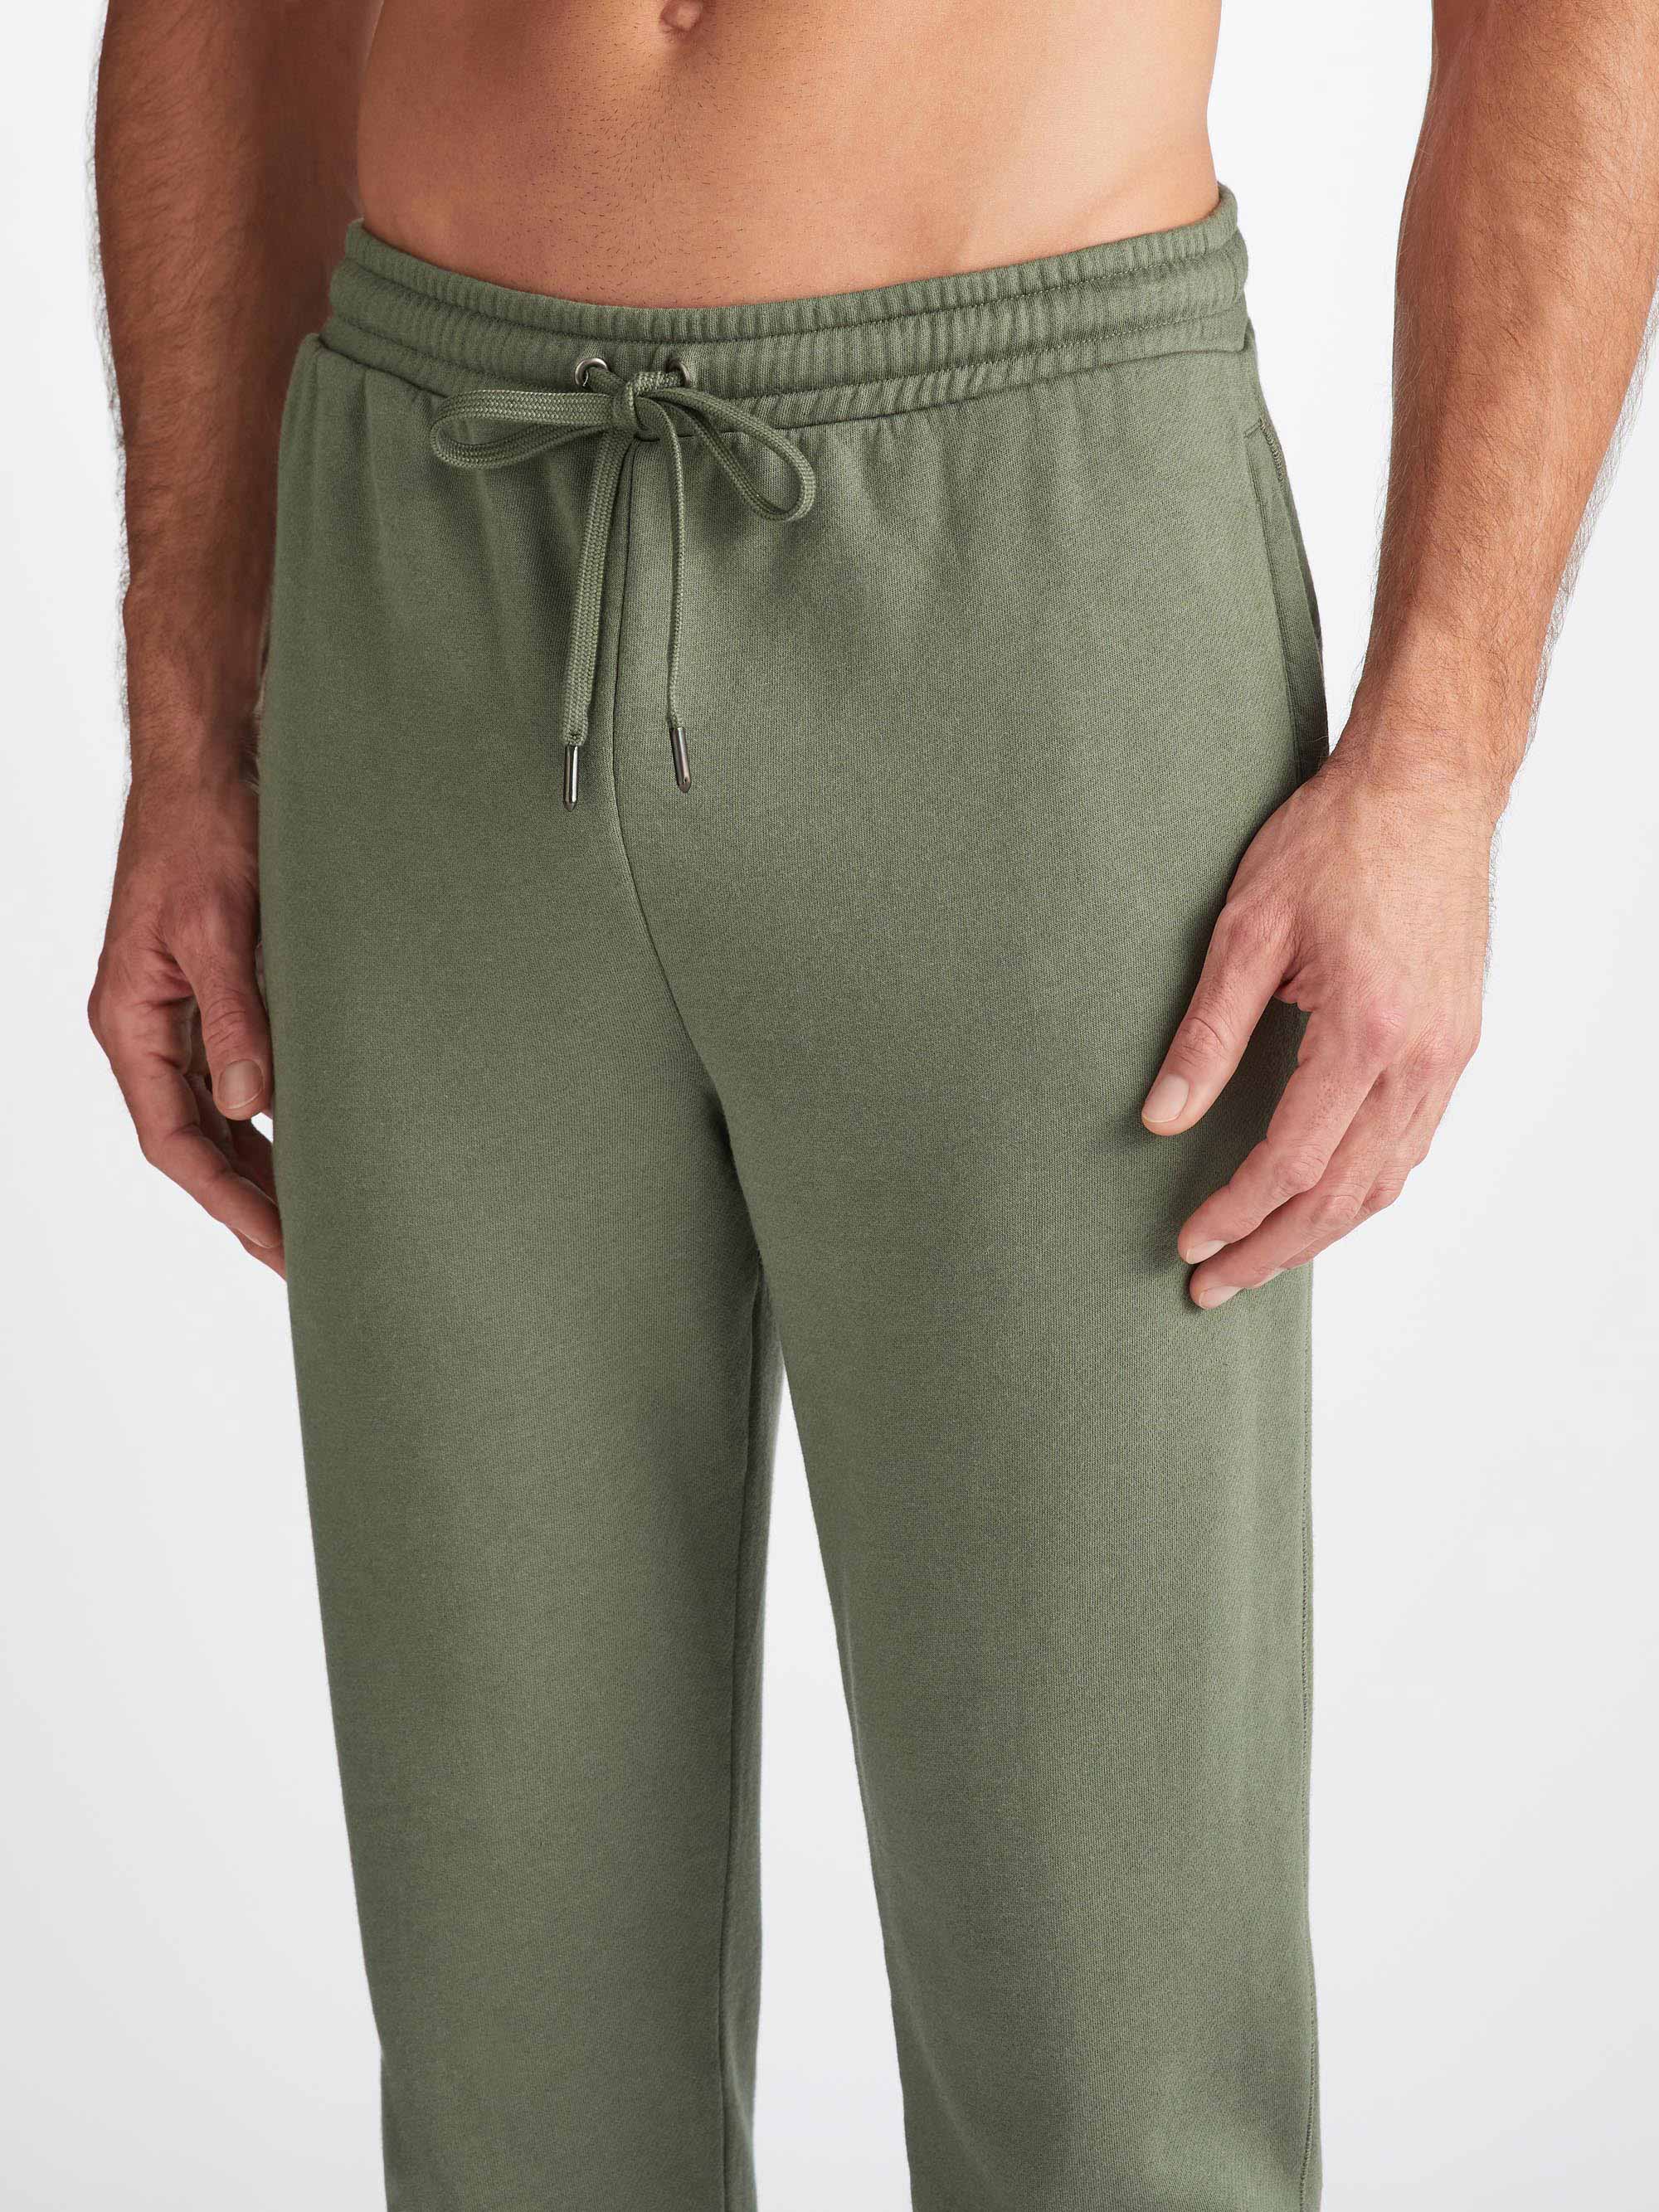 Men's Sweatpants Quinn Cotton Modal Soft Green